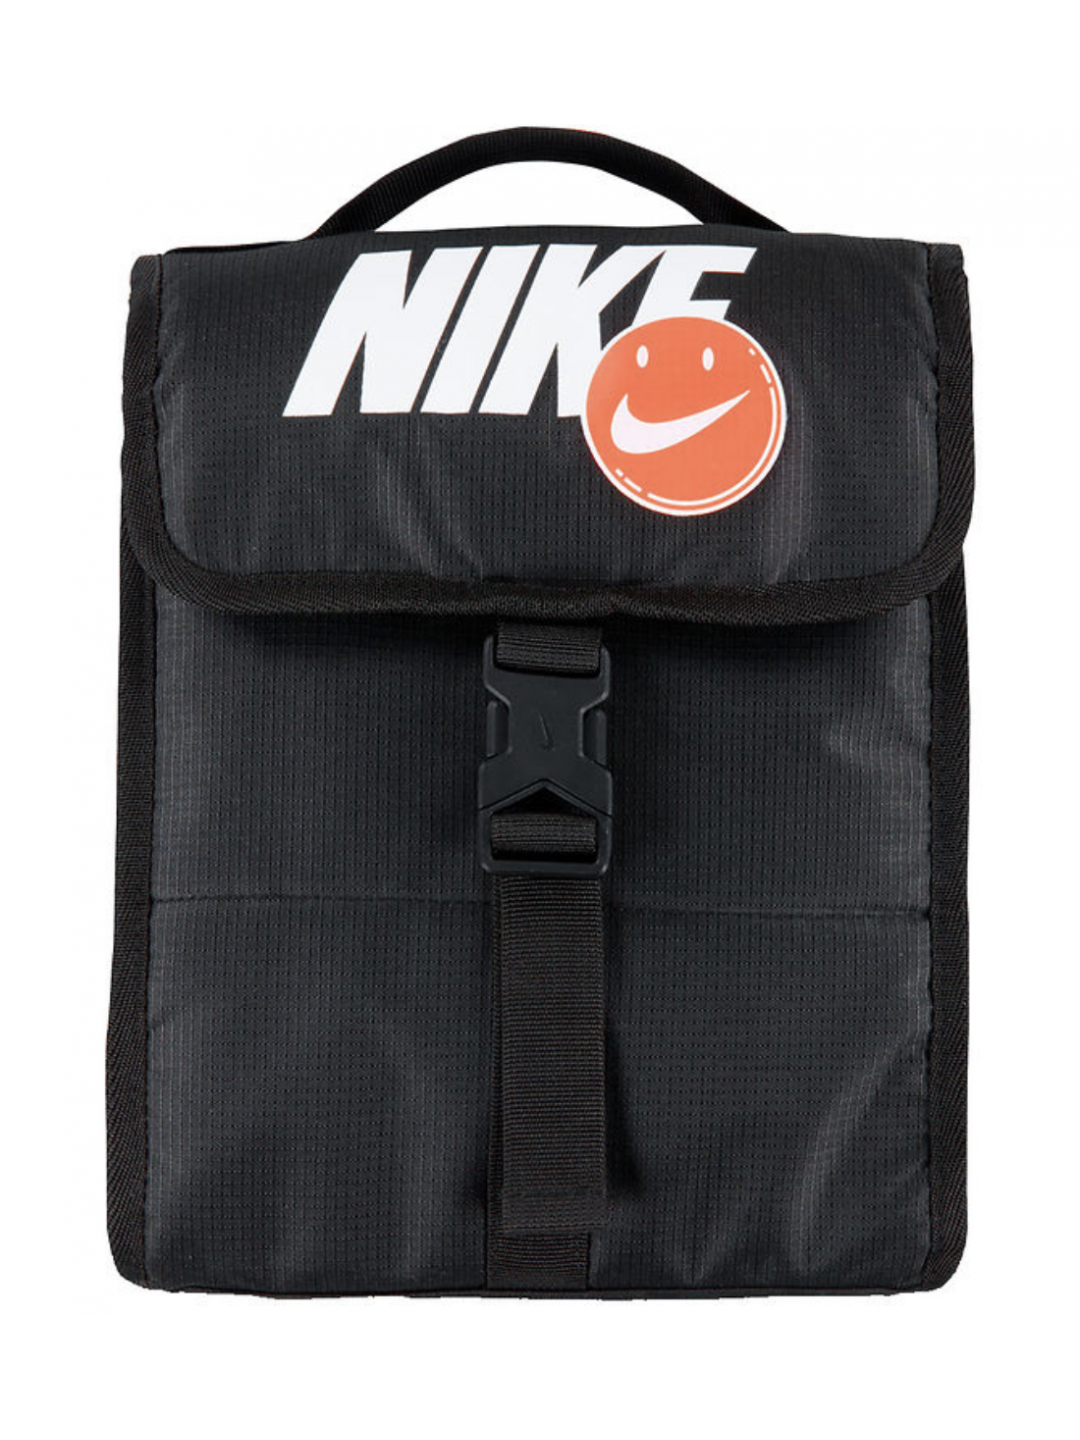 Nike swoosh smile lunch bag o s